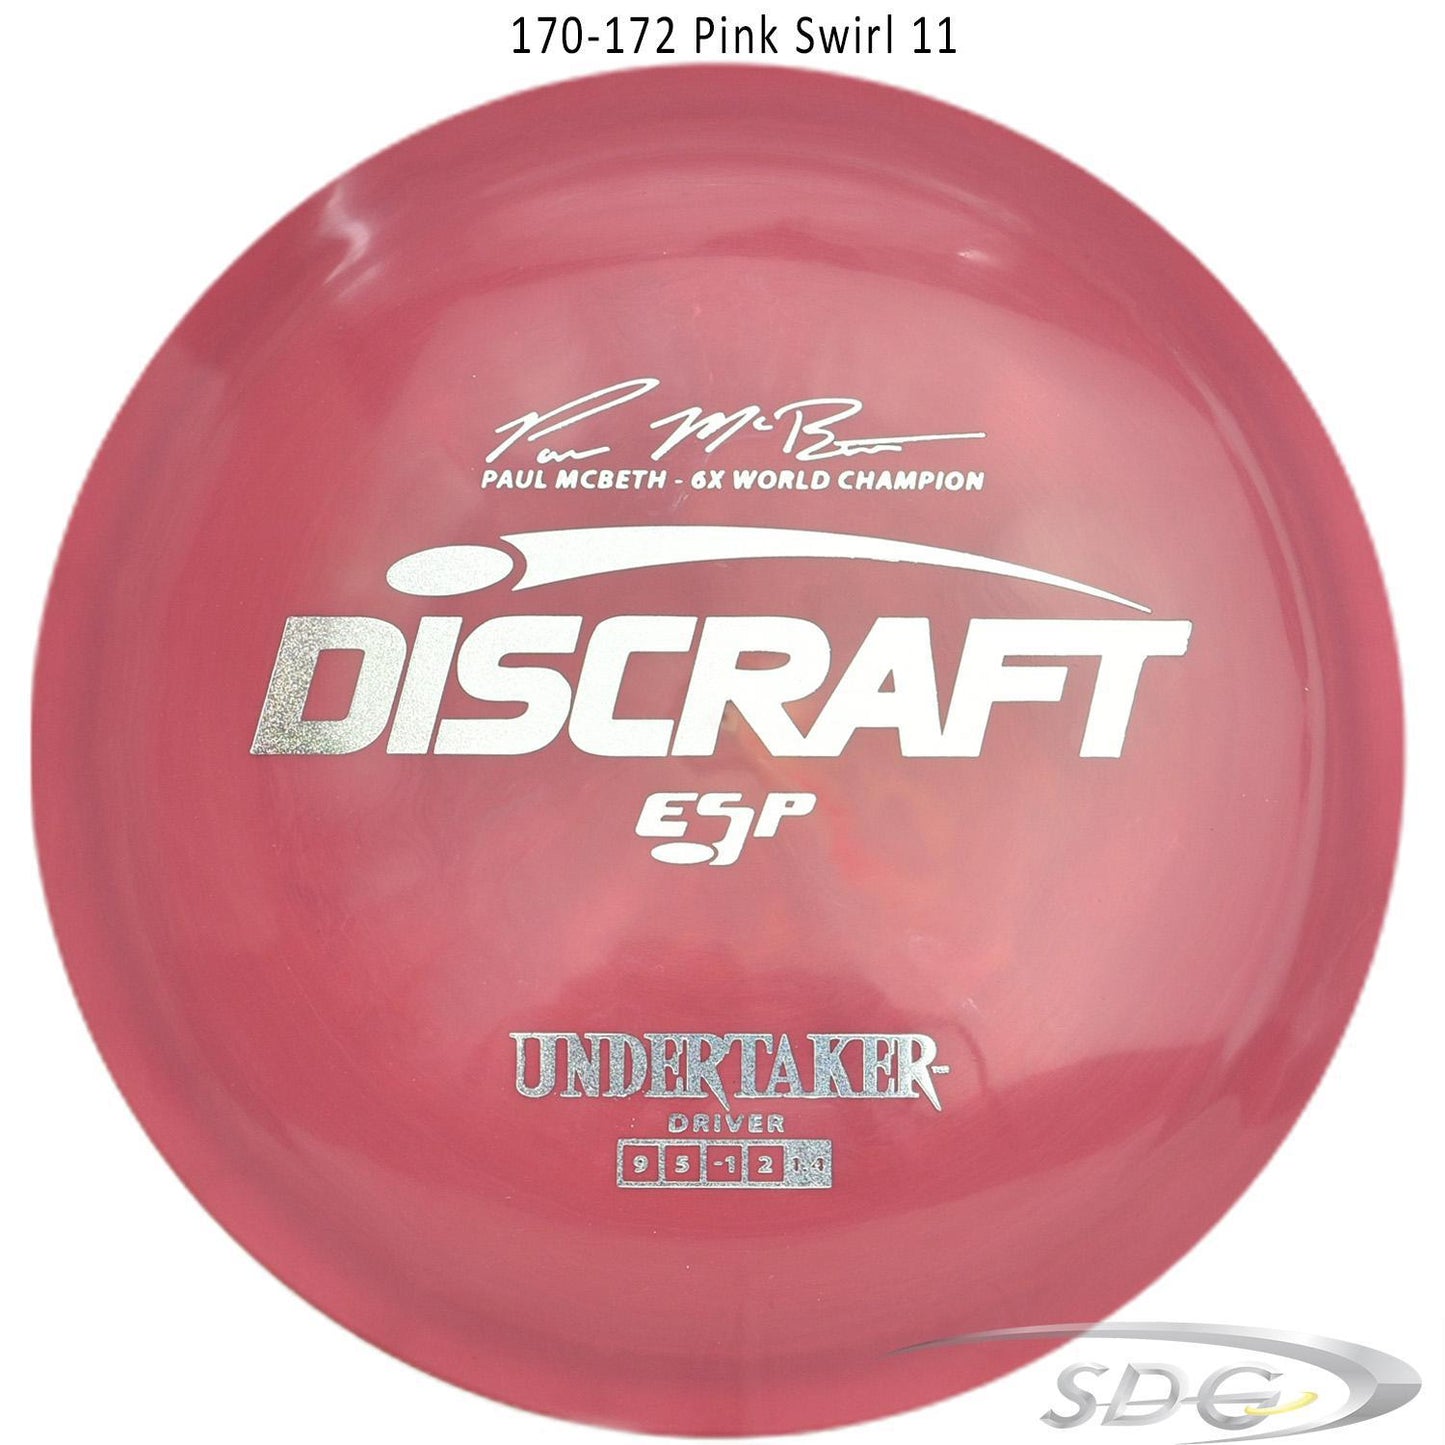 discraft-esp-undertaker-6x-paul-mcbeth-signature-series-disc-golf-distance-driver-172-170-weights 170-172 Pink Swirl 11 